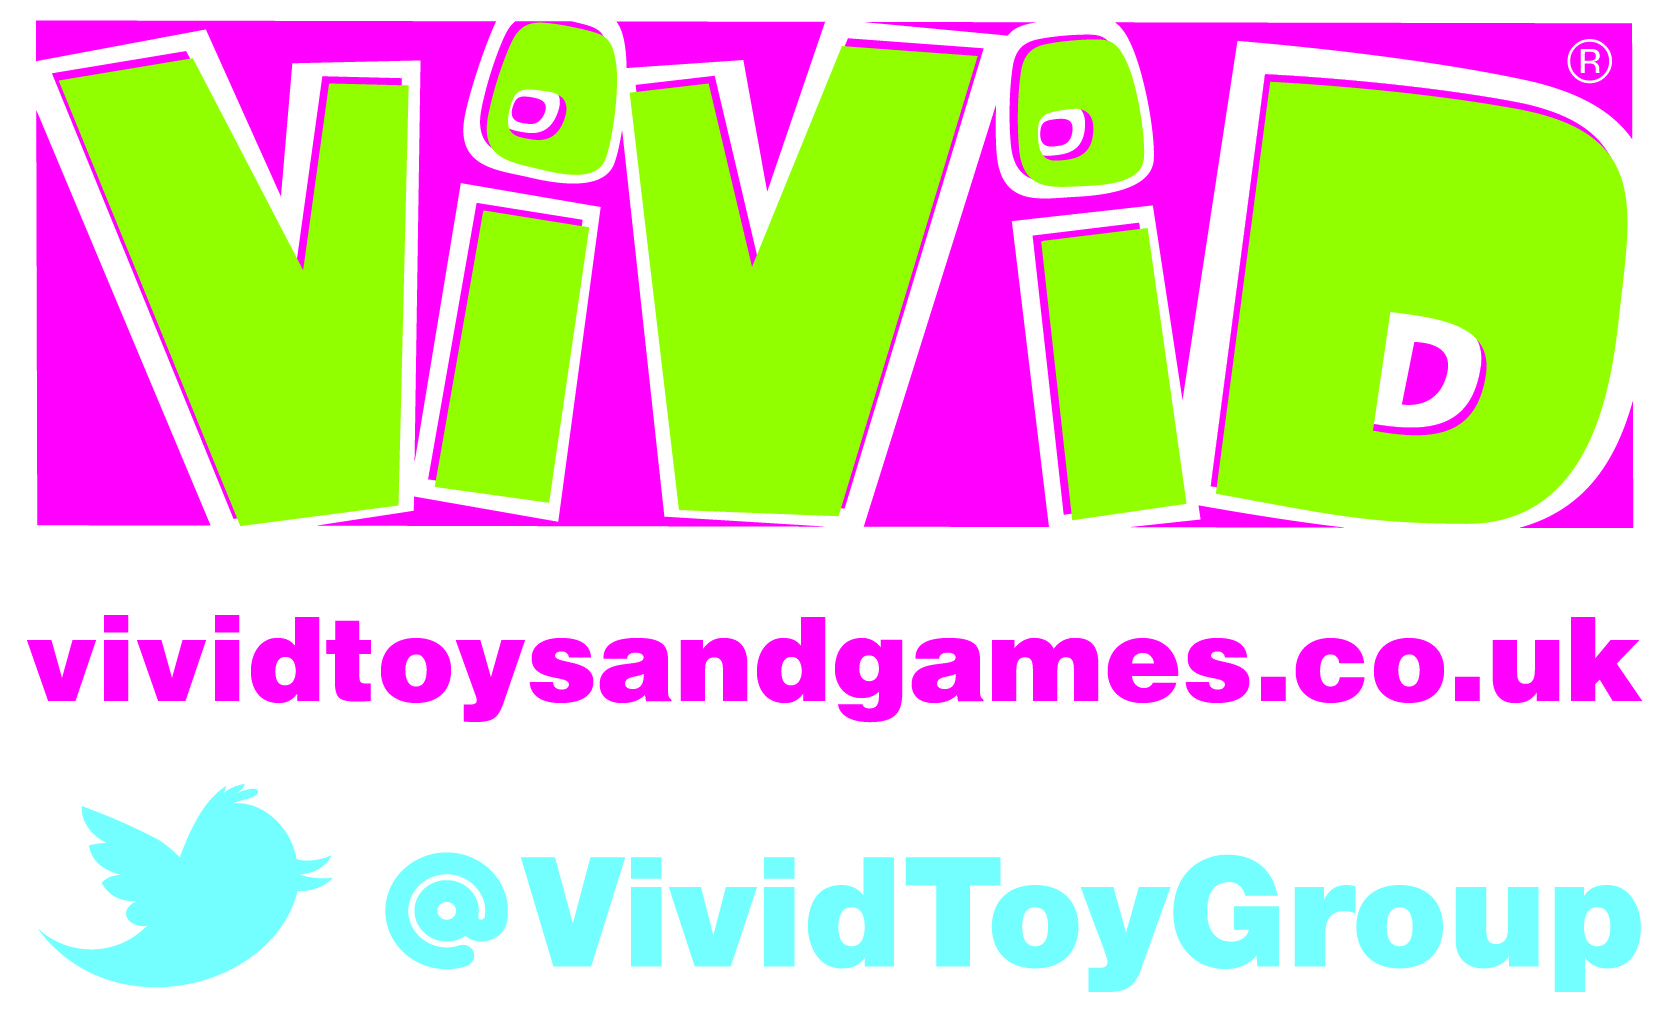 VividToys&Games+Twitter